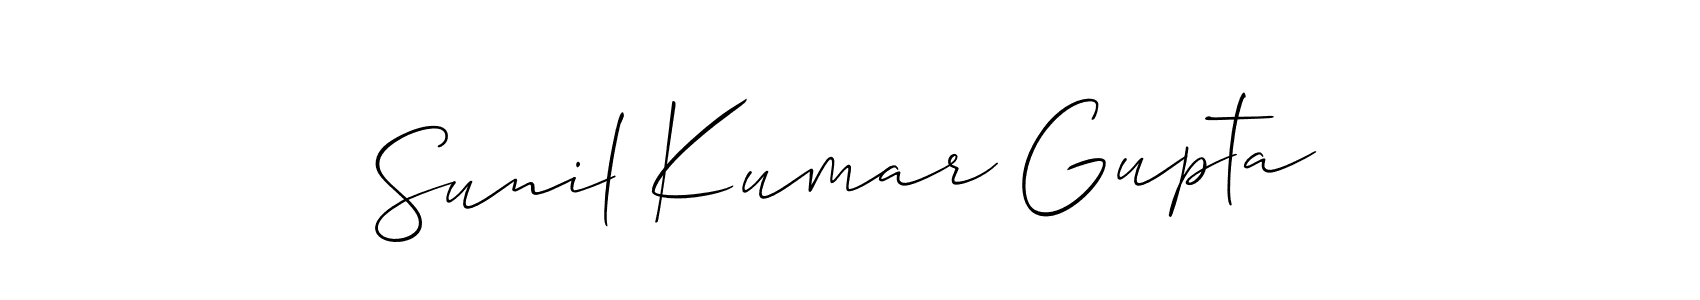 Make a beautiful signature design for name Sunil Kumar Gupta. Use this online signature maker to create a handwritten signature for free. Sunil Kumar Gupta signature style 2 images and pictures png